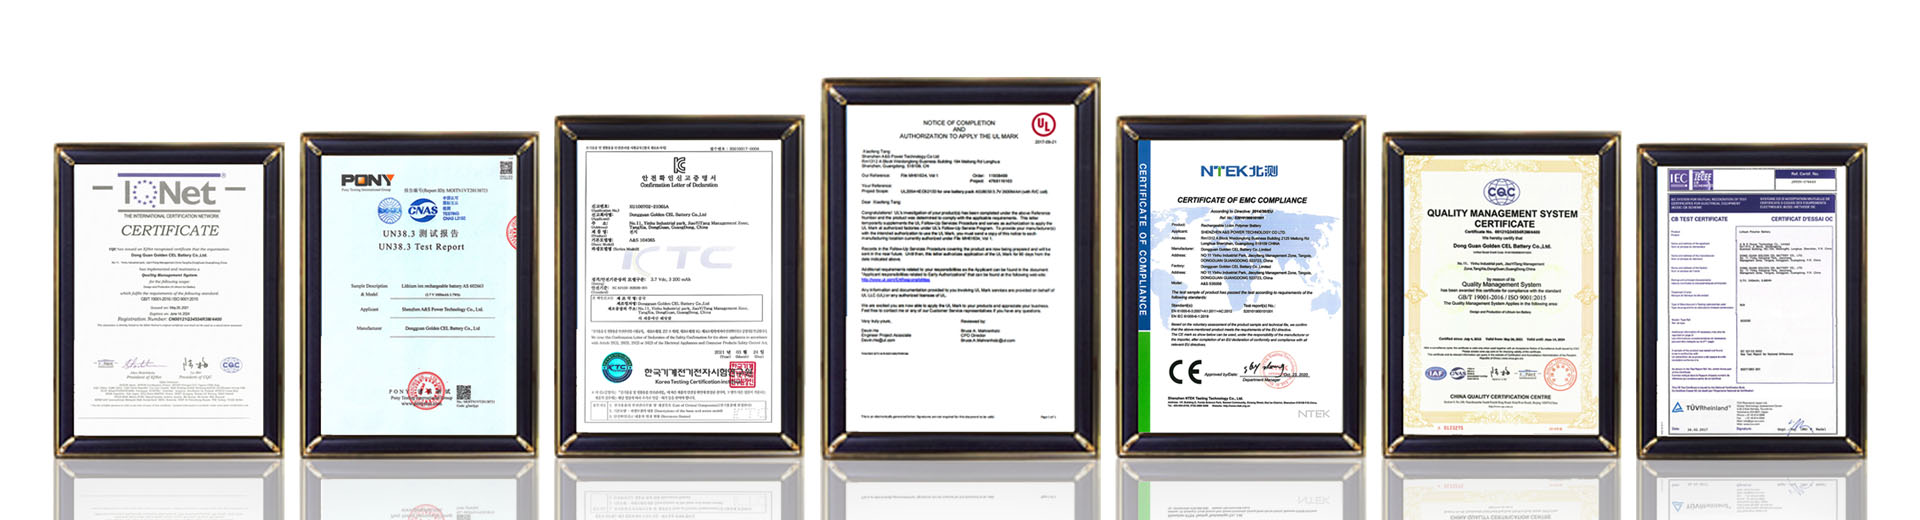 A&S Power Lithium Battery fair photo A&S Power Certification